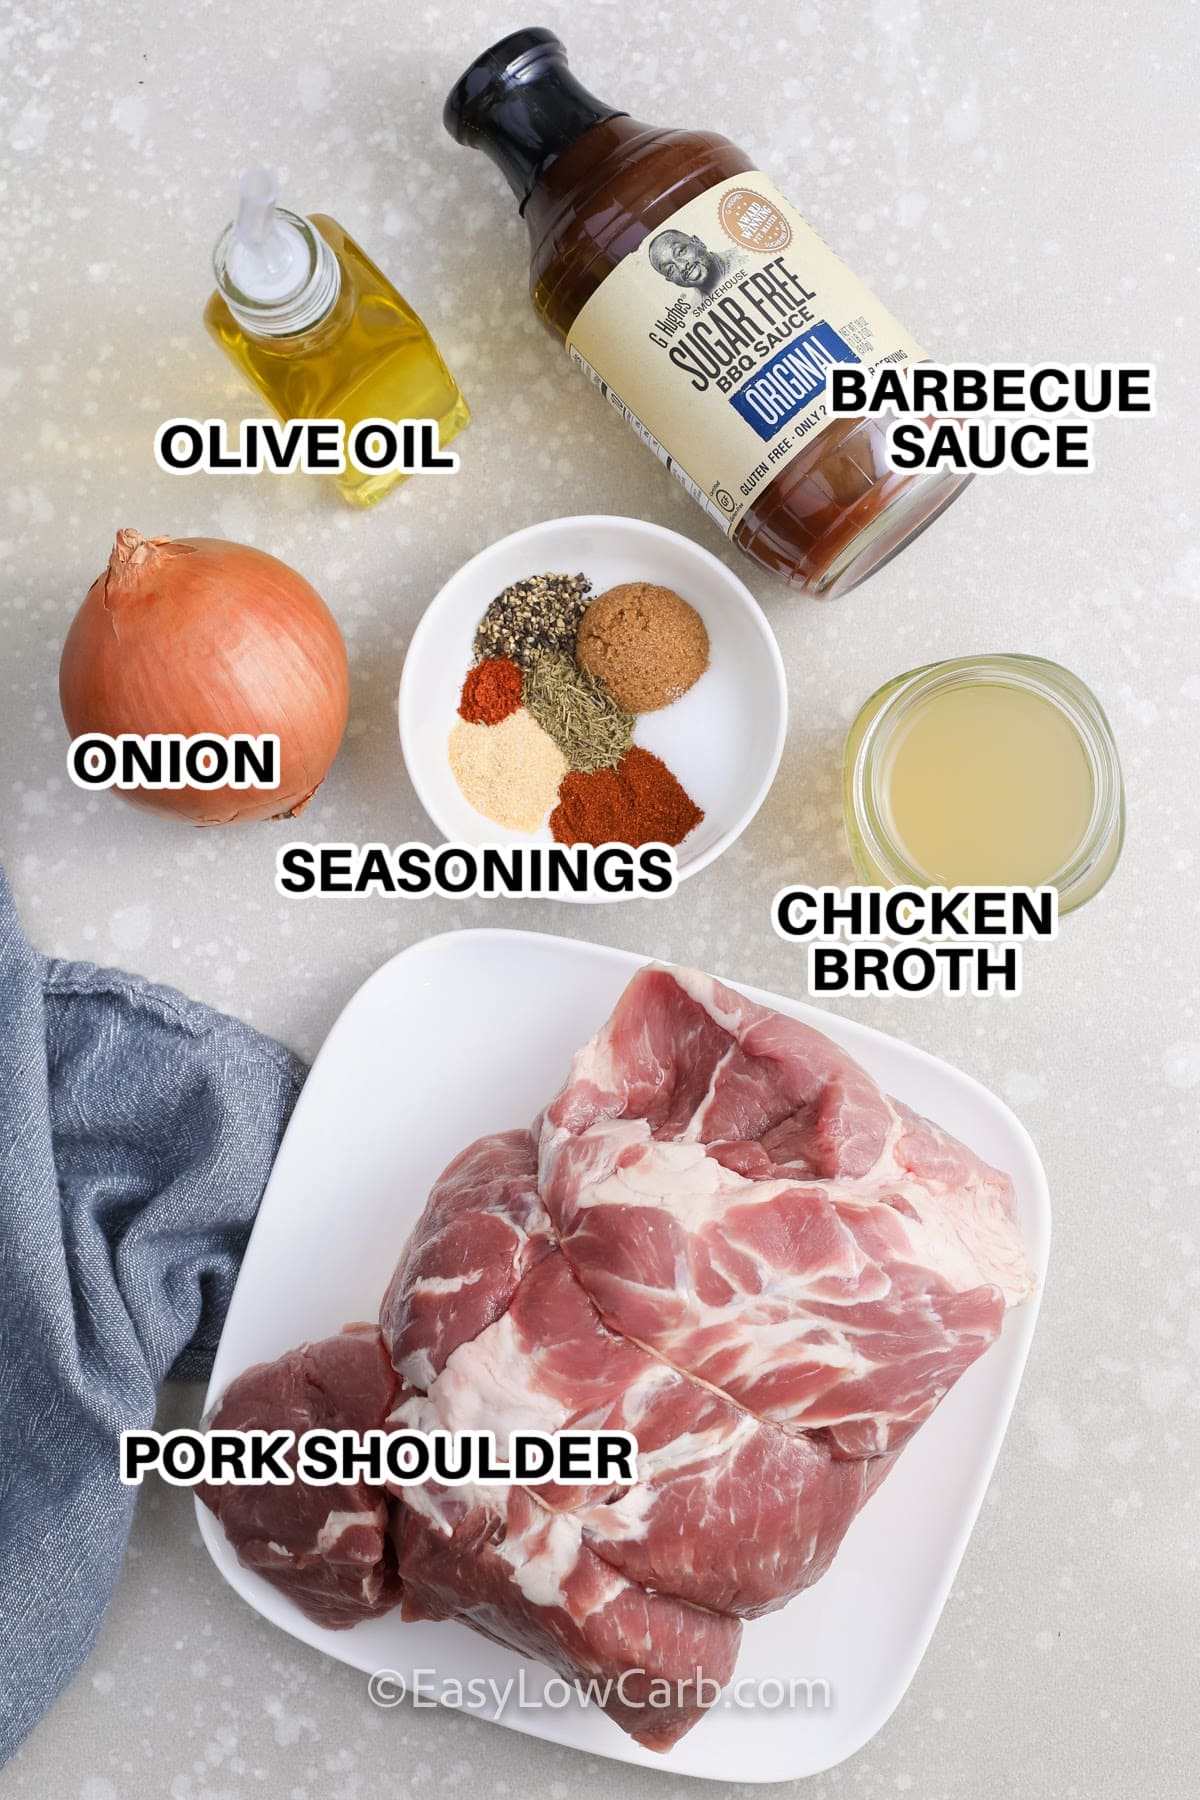 ingredients to make crockpot pulled pork: barbecue sauce, olive oil, onion, seasonings, chicken broth, pork shoulder